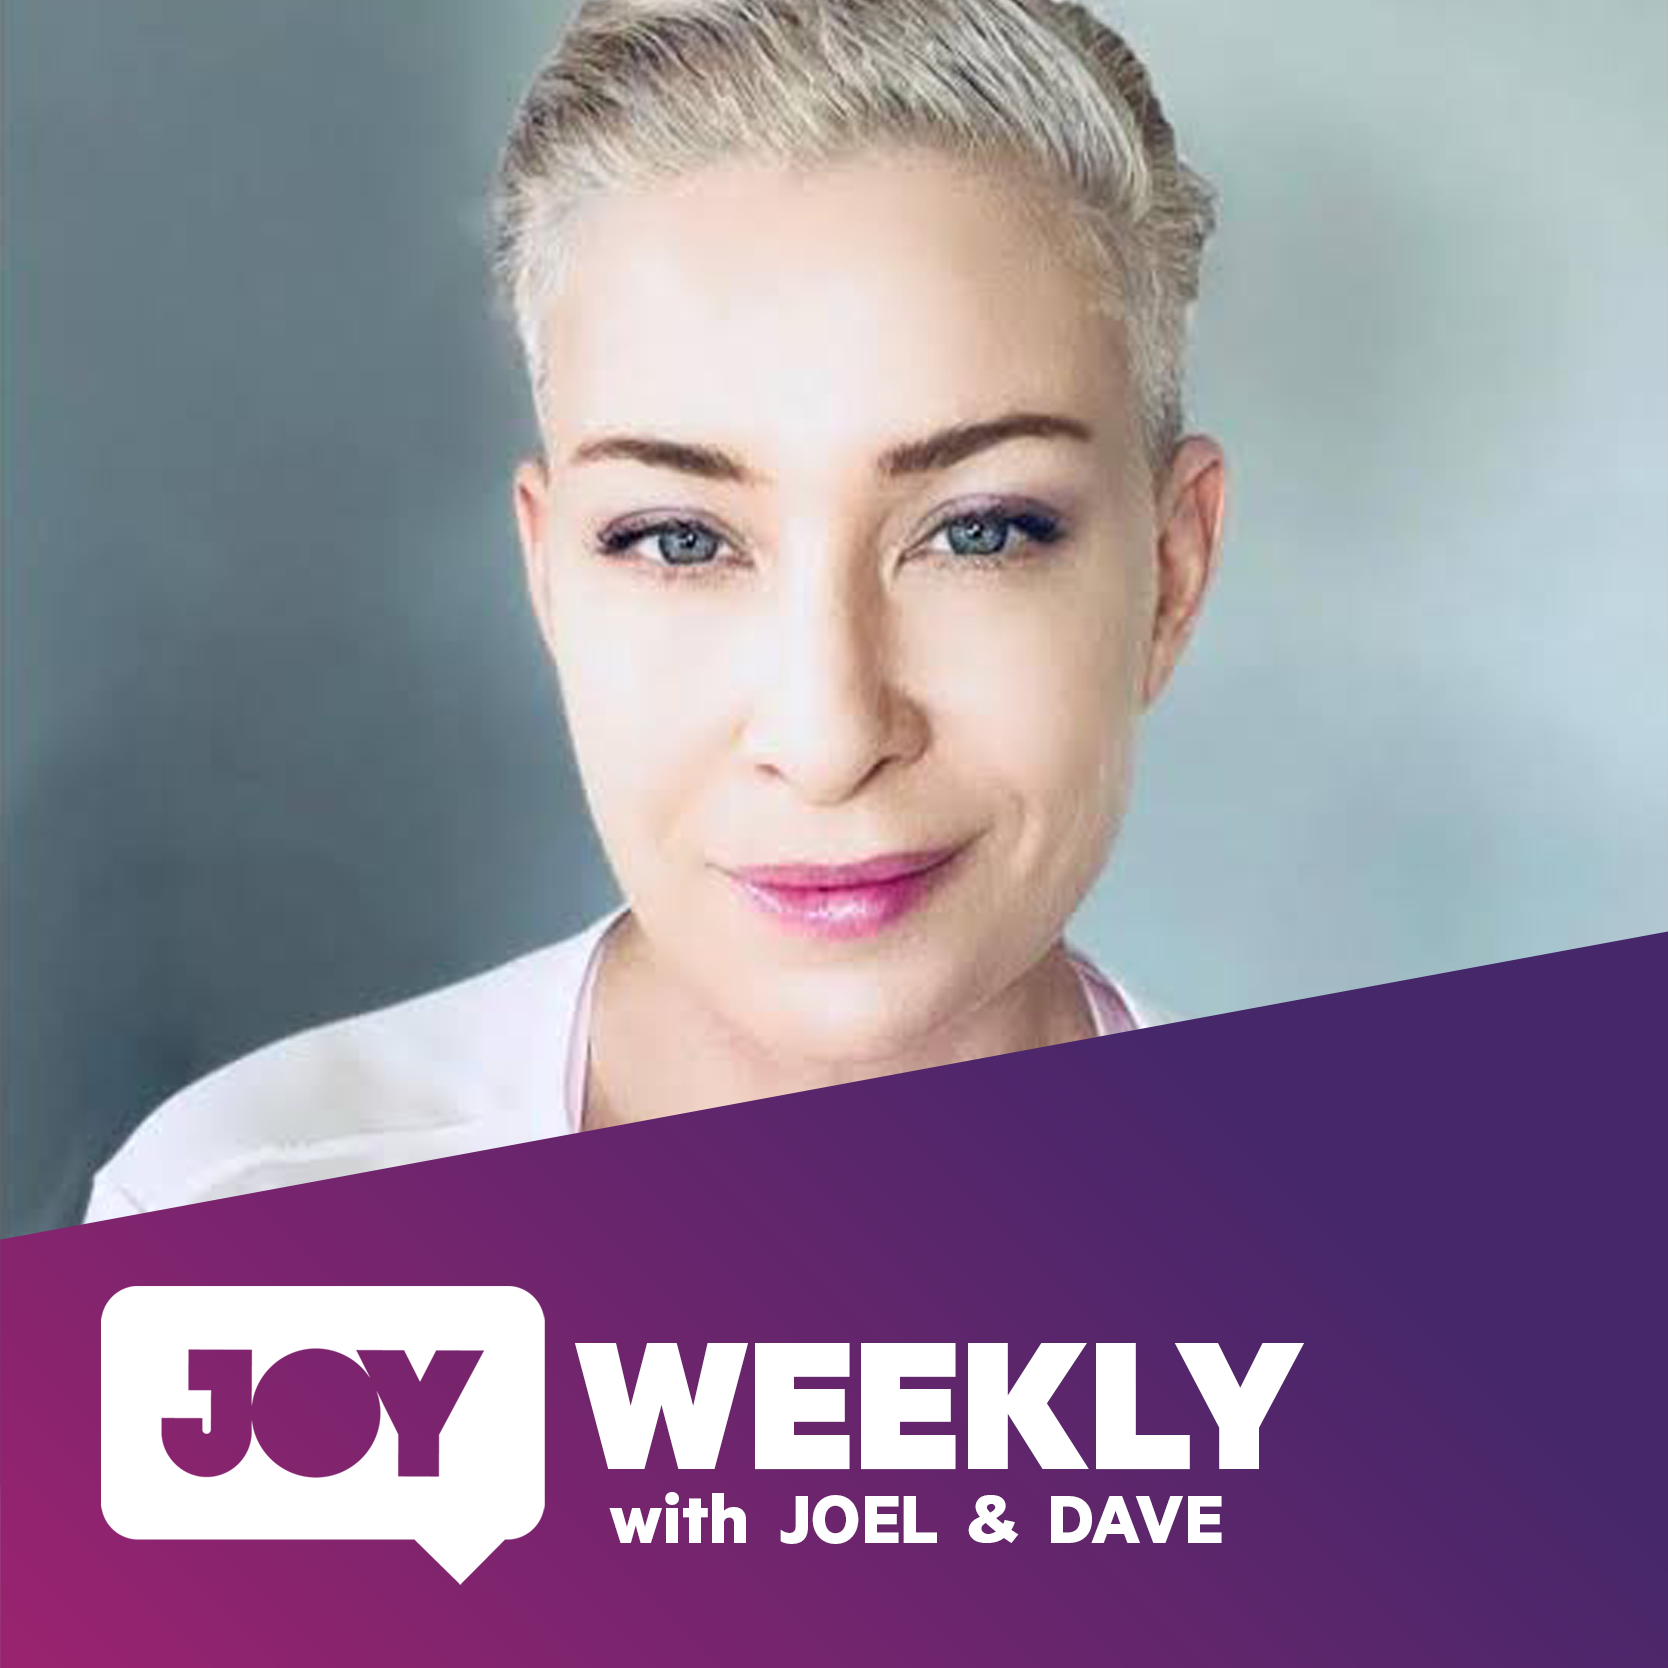 Interview: Katie Underwood takes over JOY Weekly. Help!